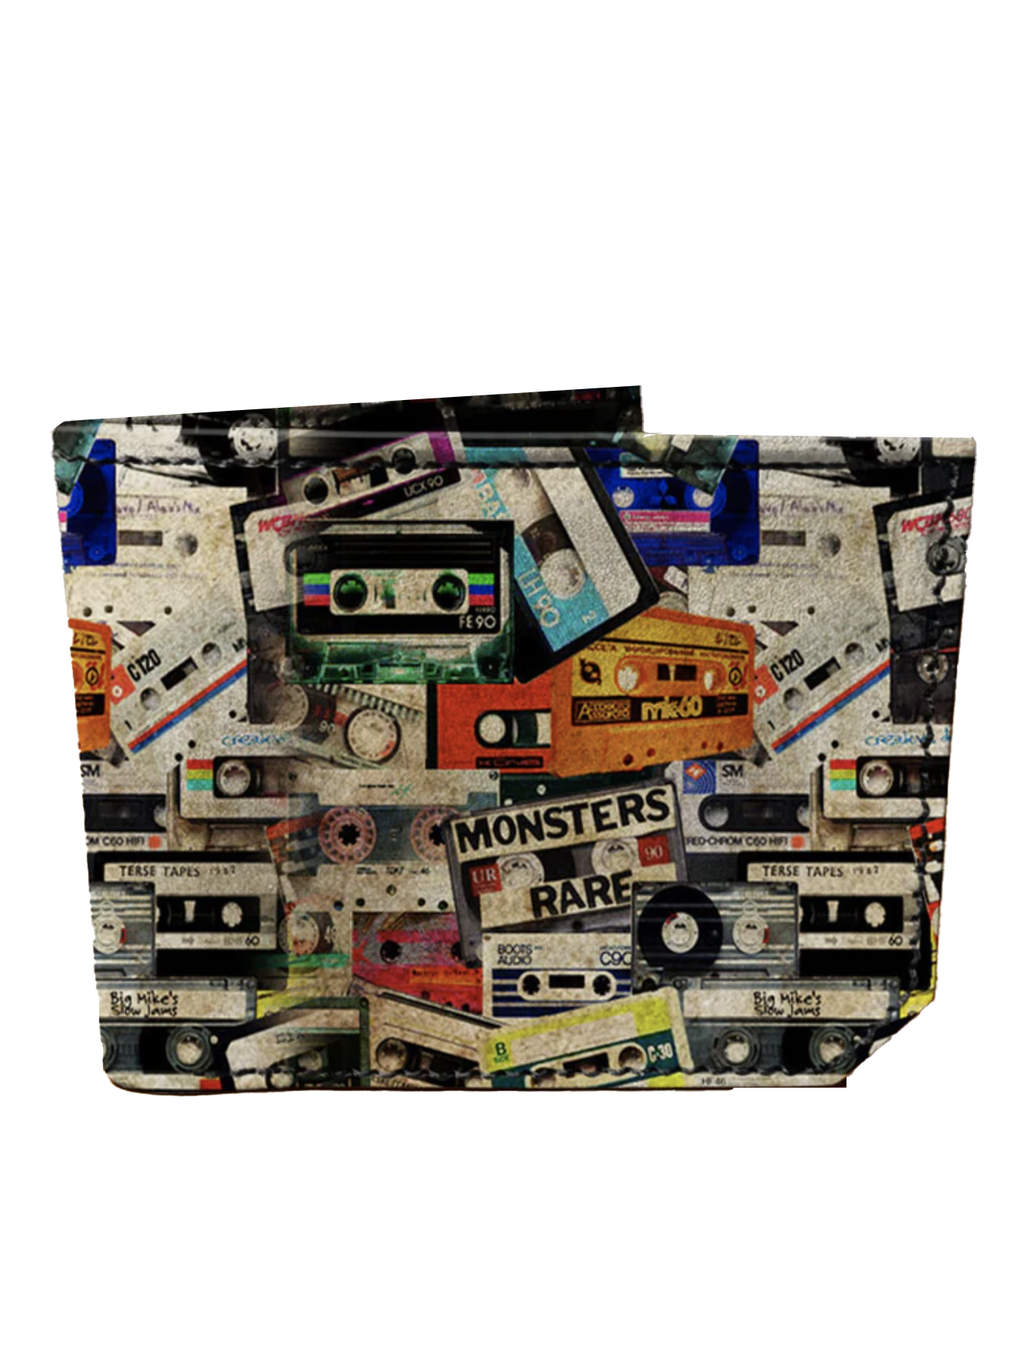 Cassette Tapes Handmade Spectrum Leather Wallet